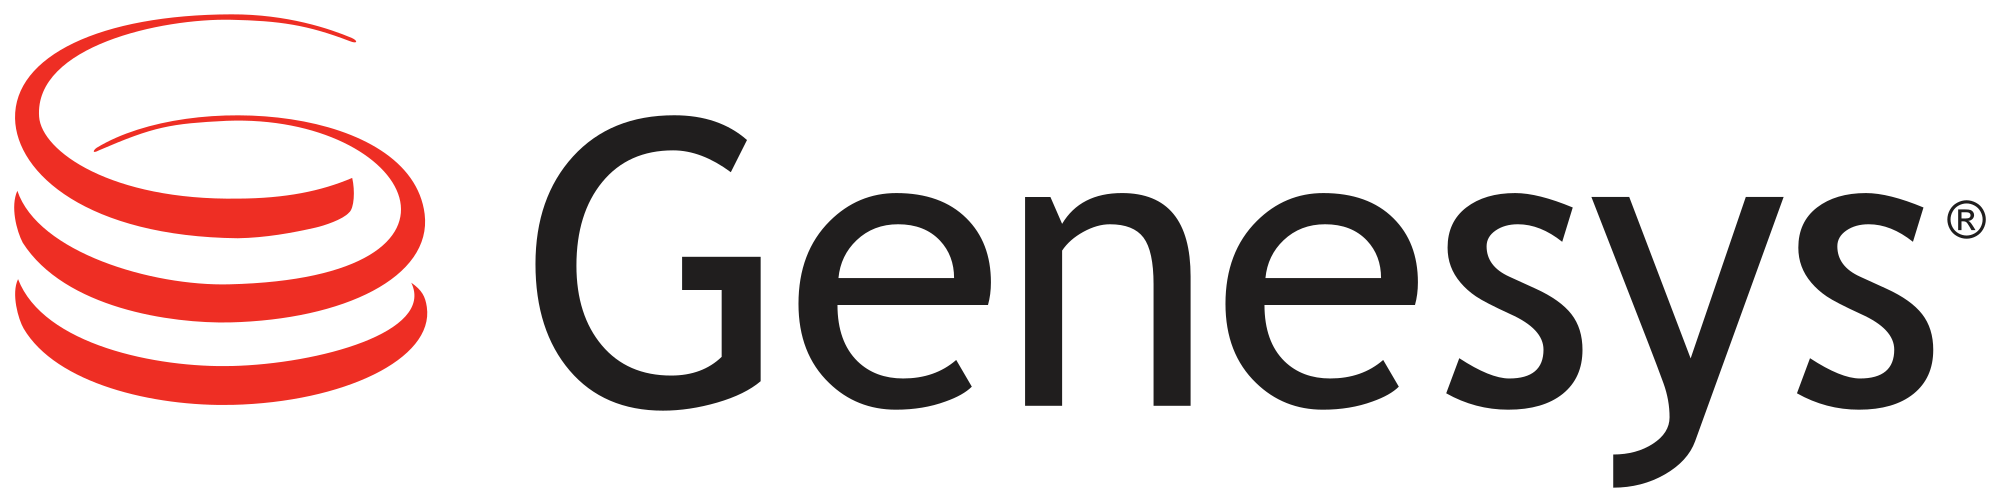 Genesys Logo.png